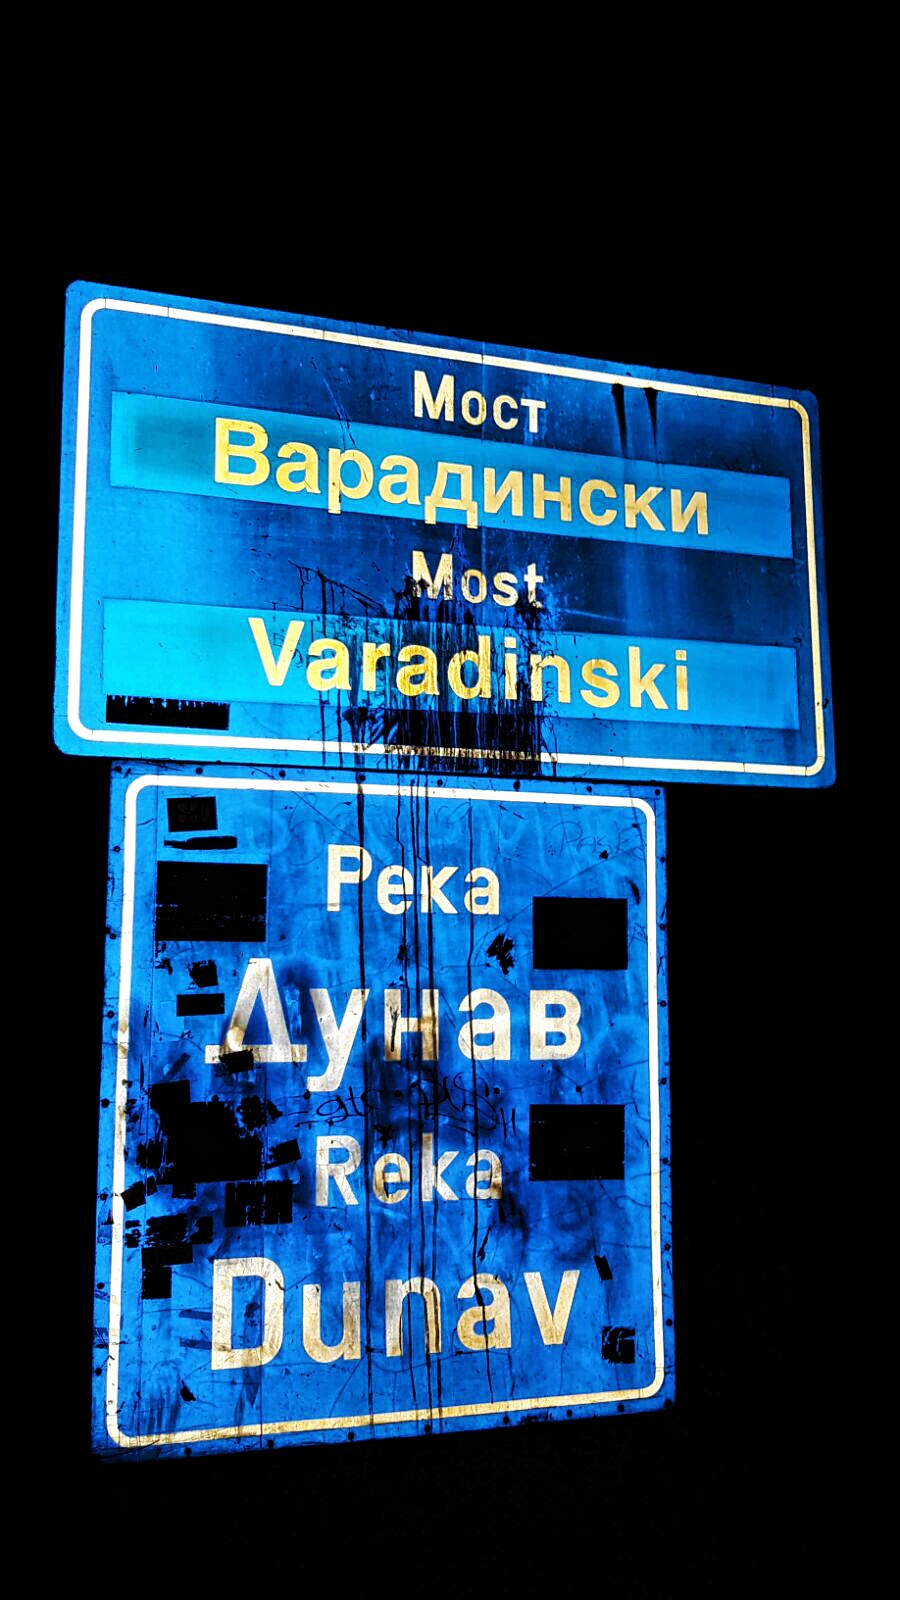 Serbian Street Sign